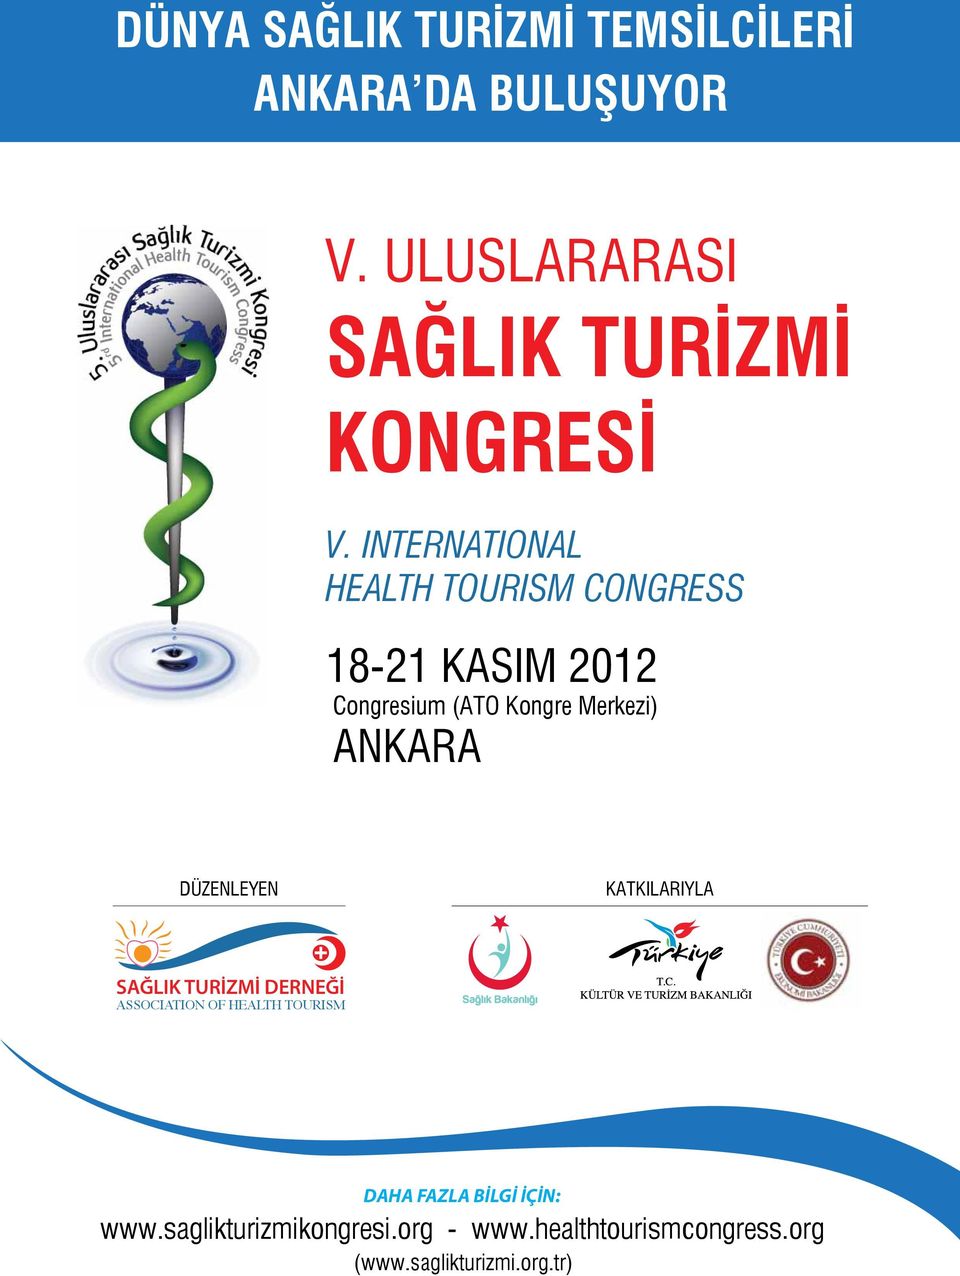 INTERNATIONAL HEALTH TOURISM CONGRESS 18-21 KASIM 2012 Congresium (ATO Kongre Merkezi) ANKARA